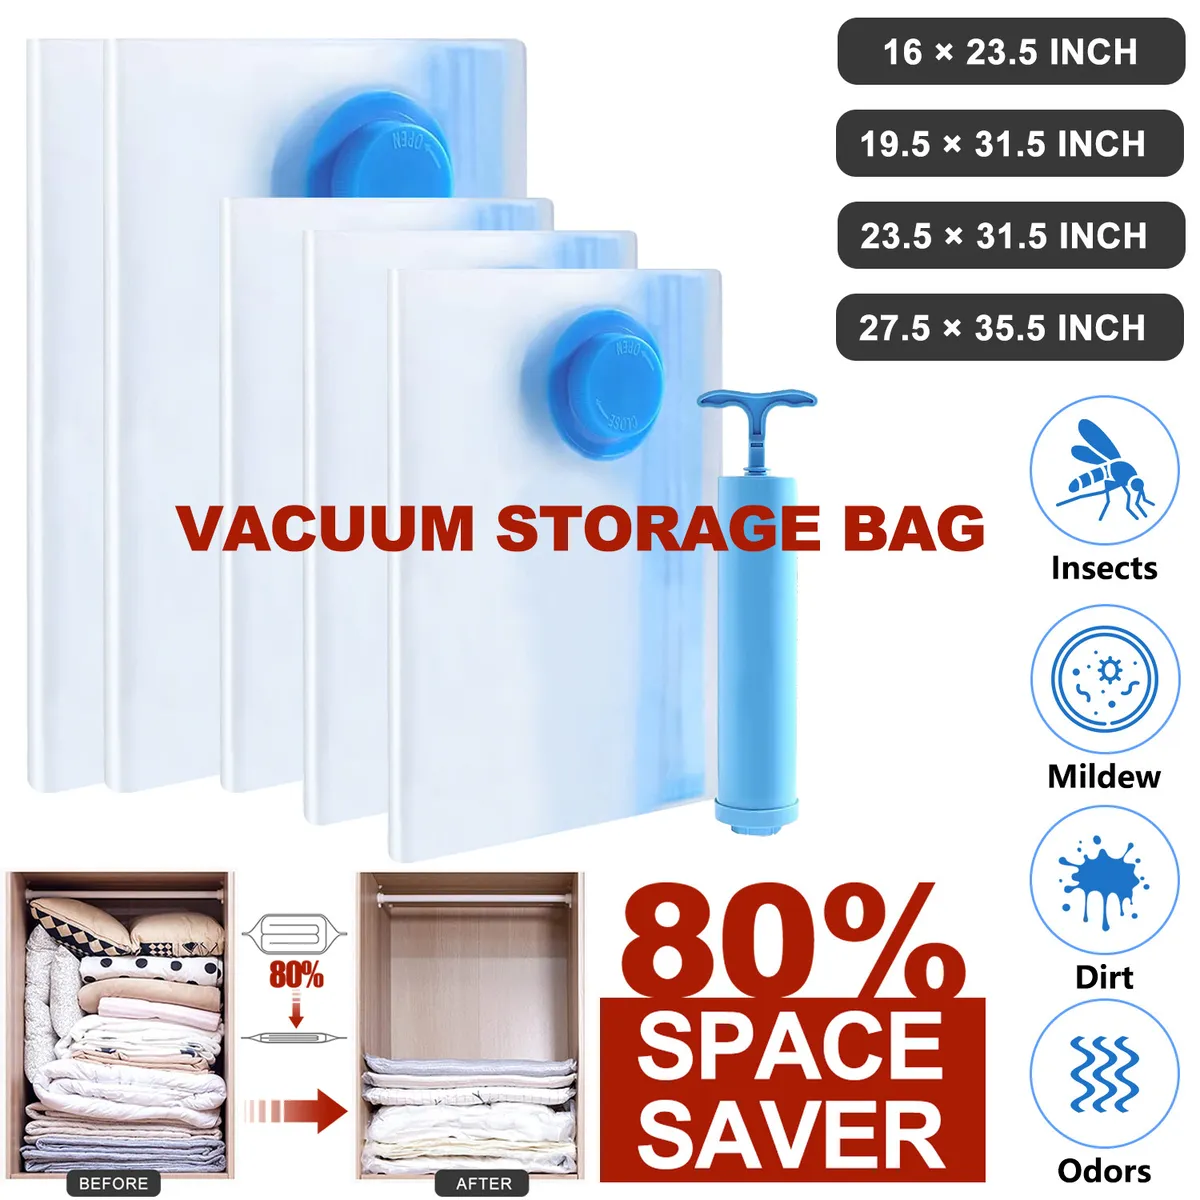 Space Saver Vacuum Storage Bags with Hand Pump Vacuum Seal Bags